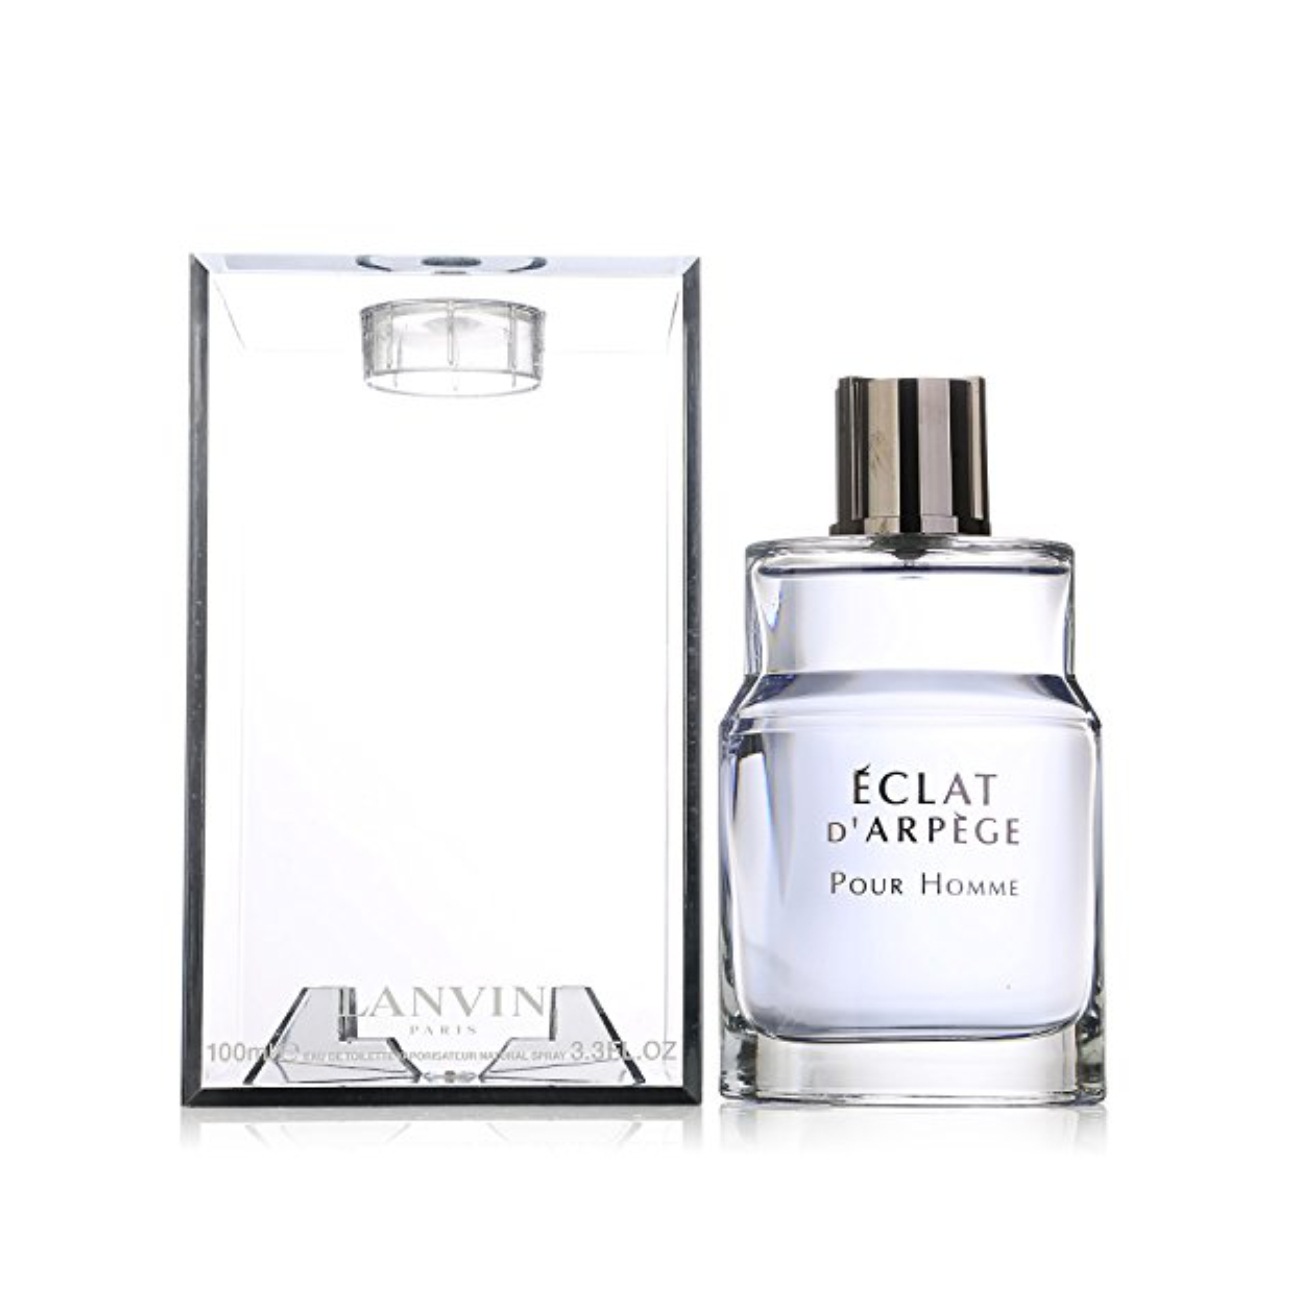 Shop Lanvin Eclat Perfume Men online